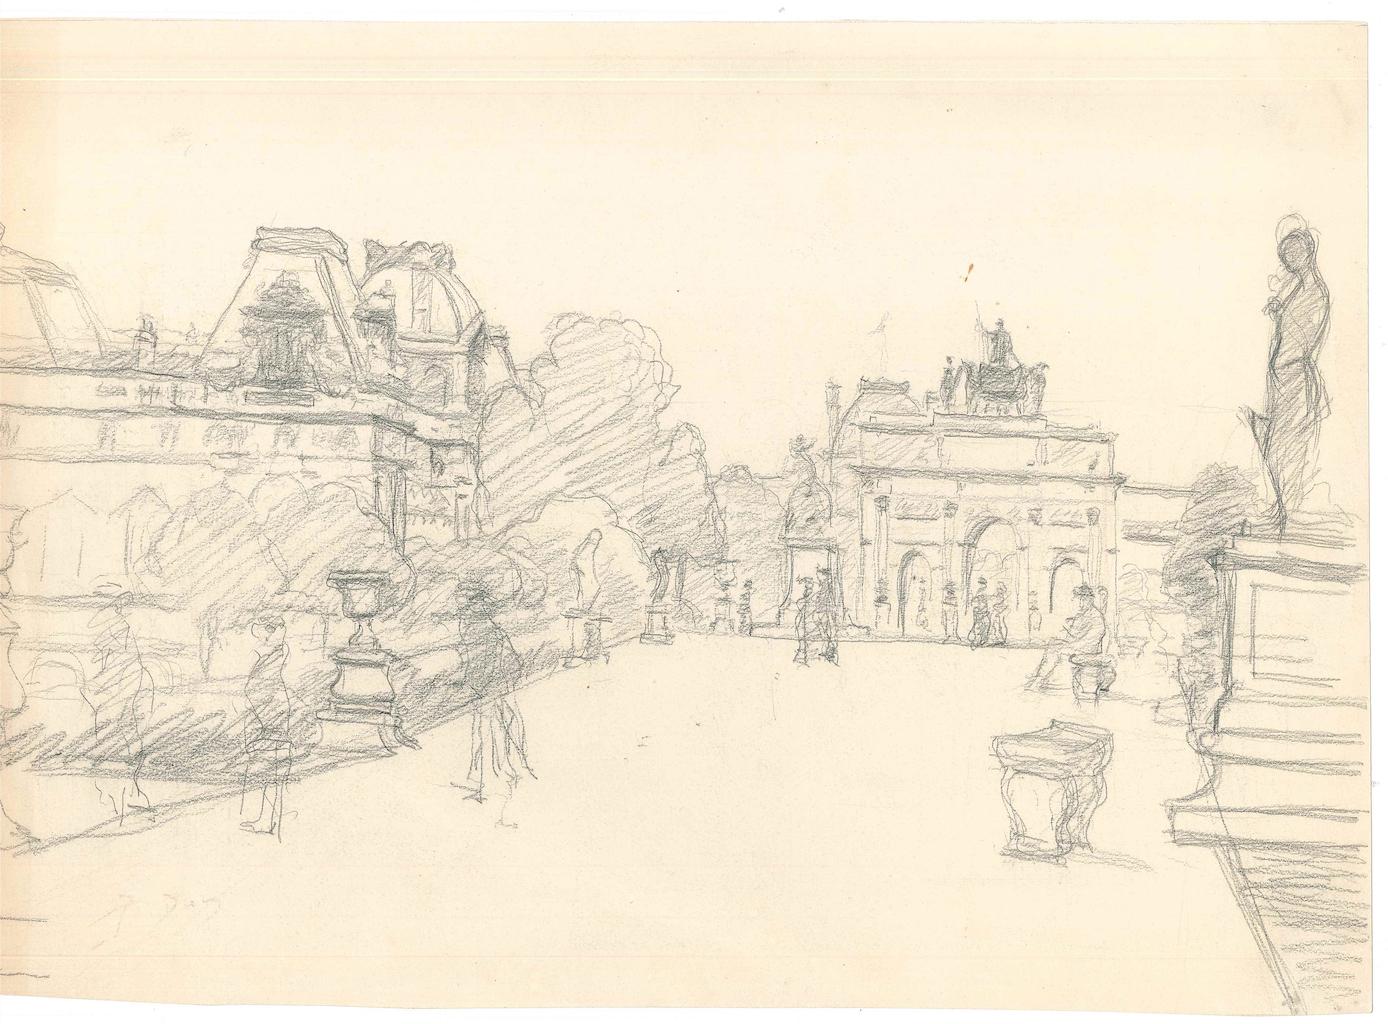 Unknown Landscape Art - Paris - Pencil on Paper - Early 20th Century